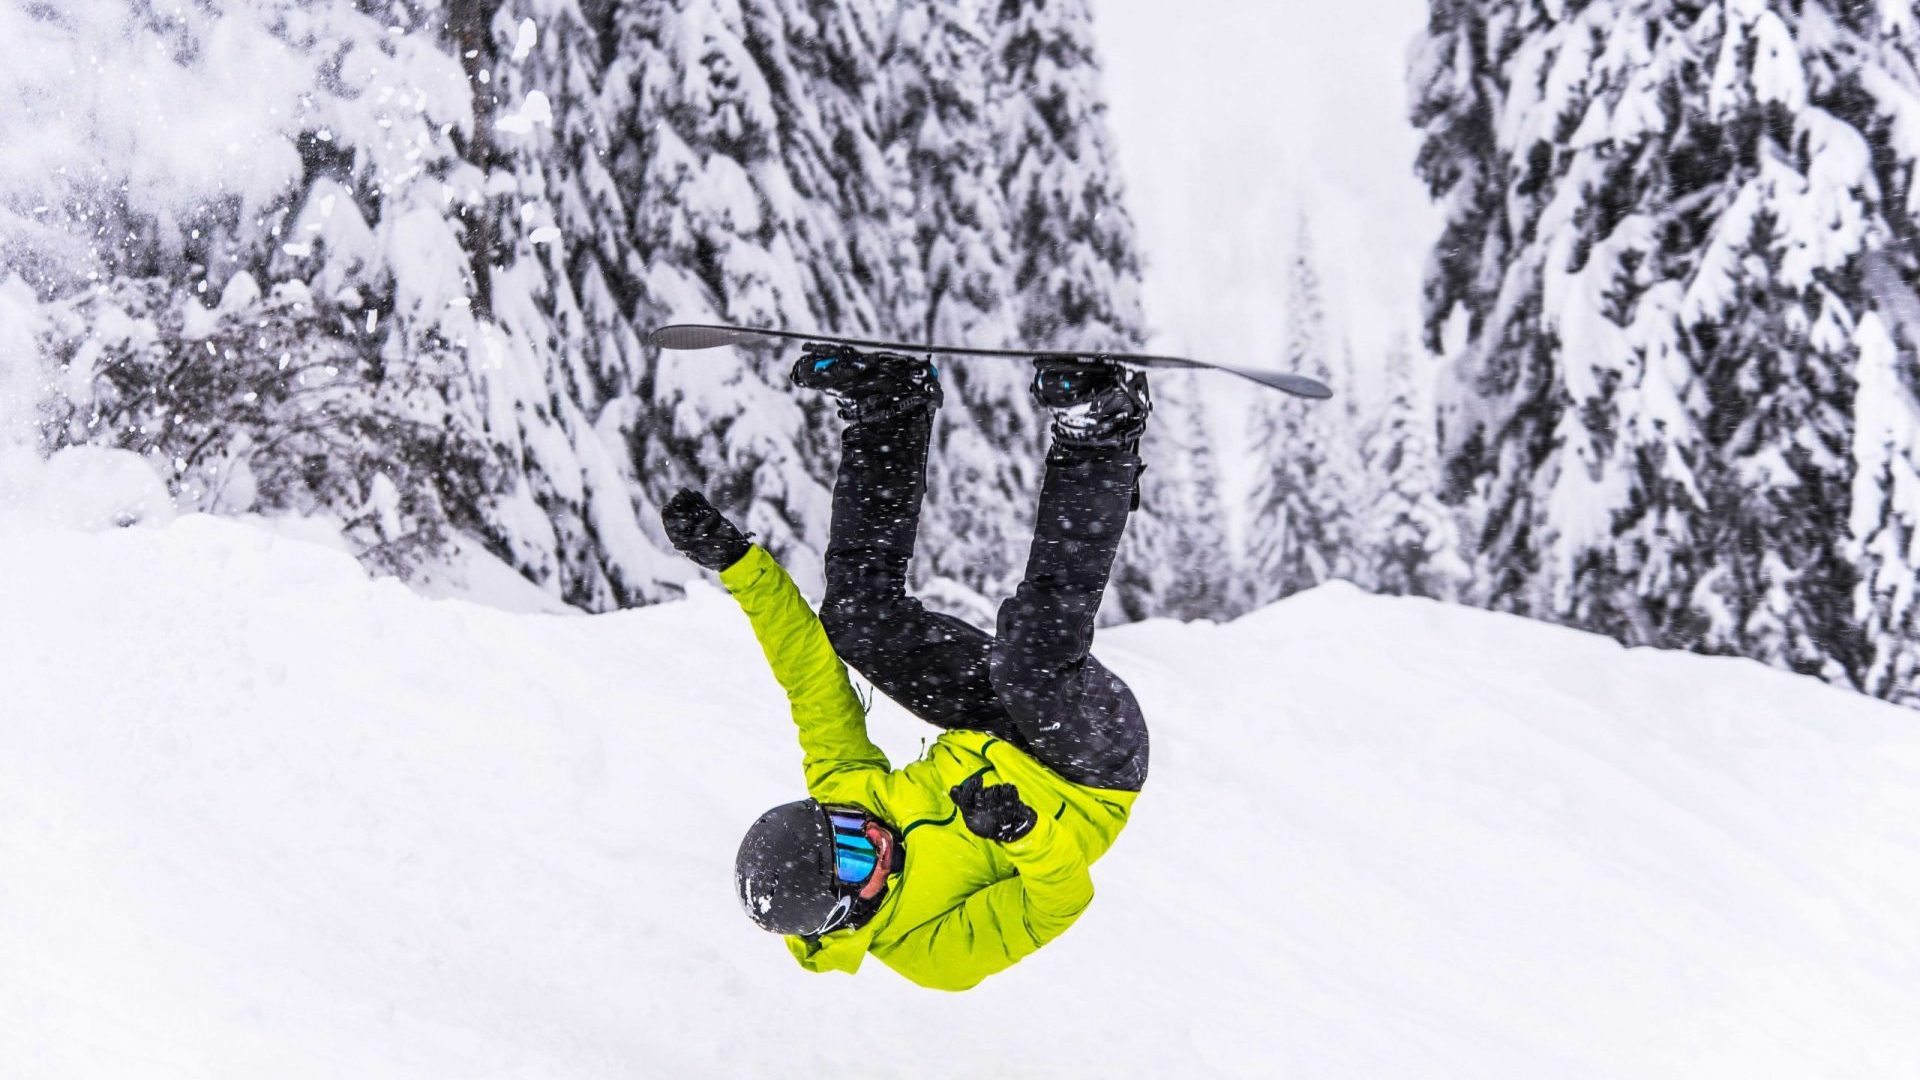 Snowboarder in green jacket performing flip